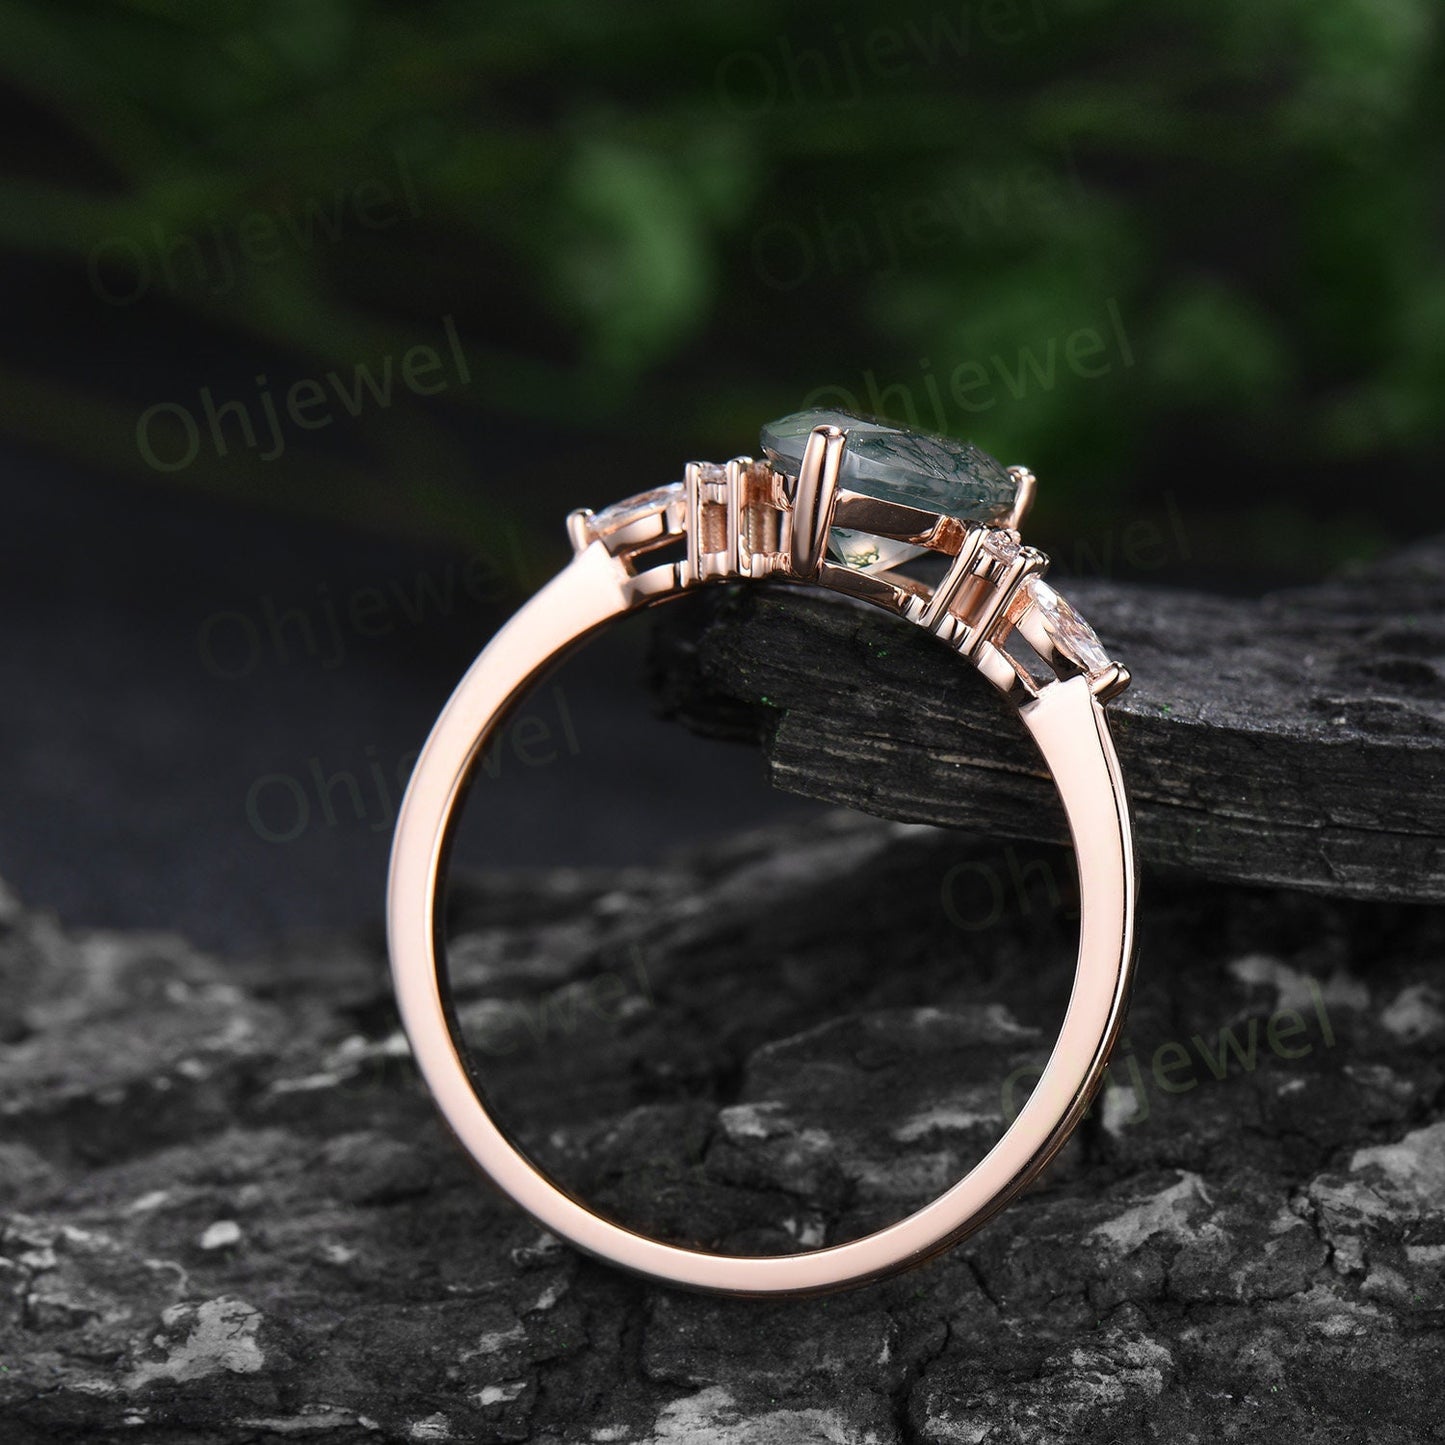 8x10mm pear emerald engagement ring marquise alexandrite ring rose gold art deco diamond bridal ring set women green gemstone ring jewelry